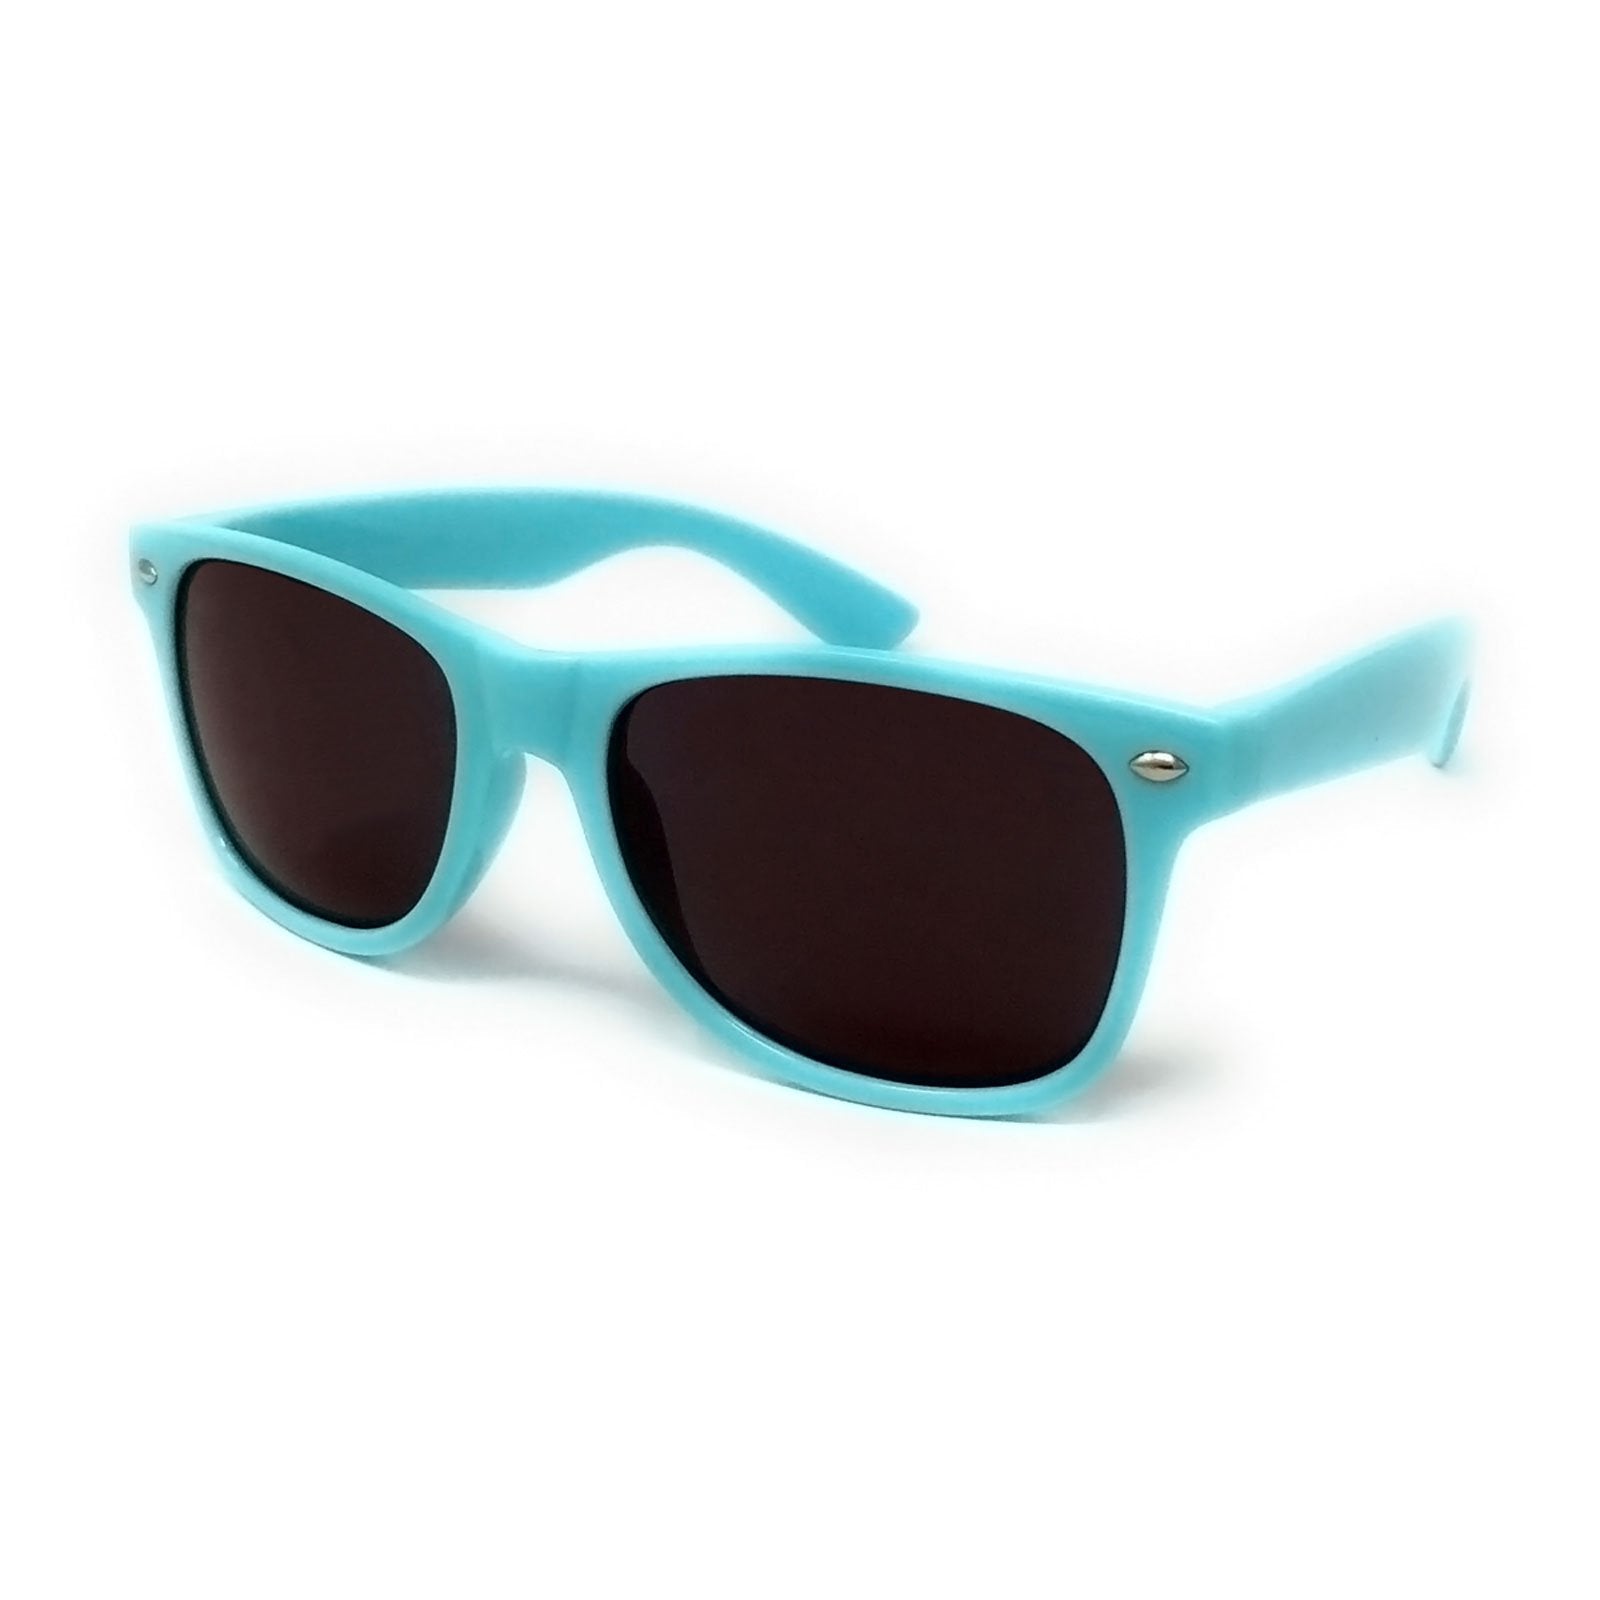 Wholesale Classic Sunglasses - Sky Blue Frame, Black Lens